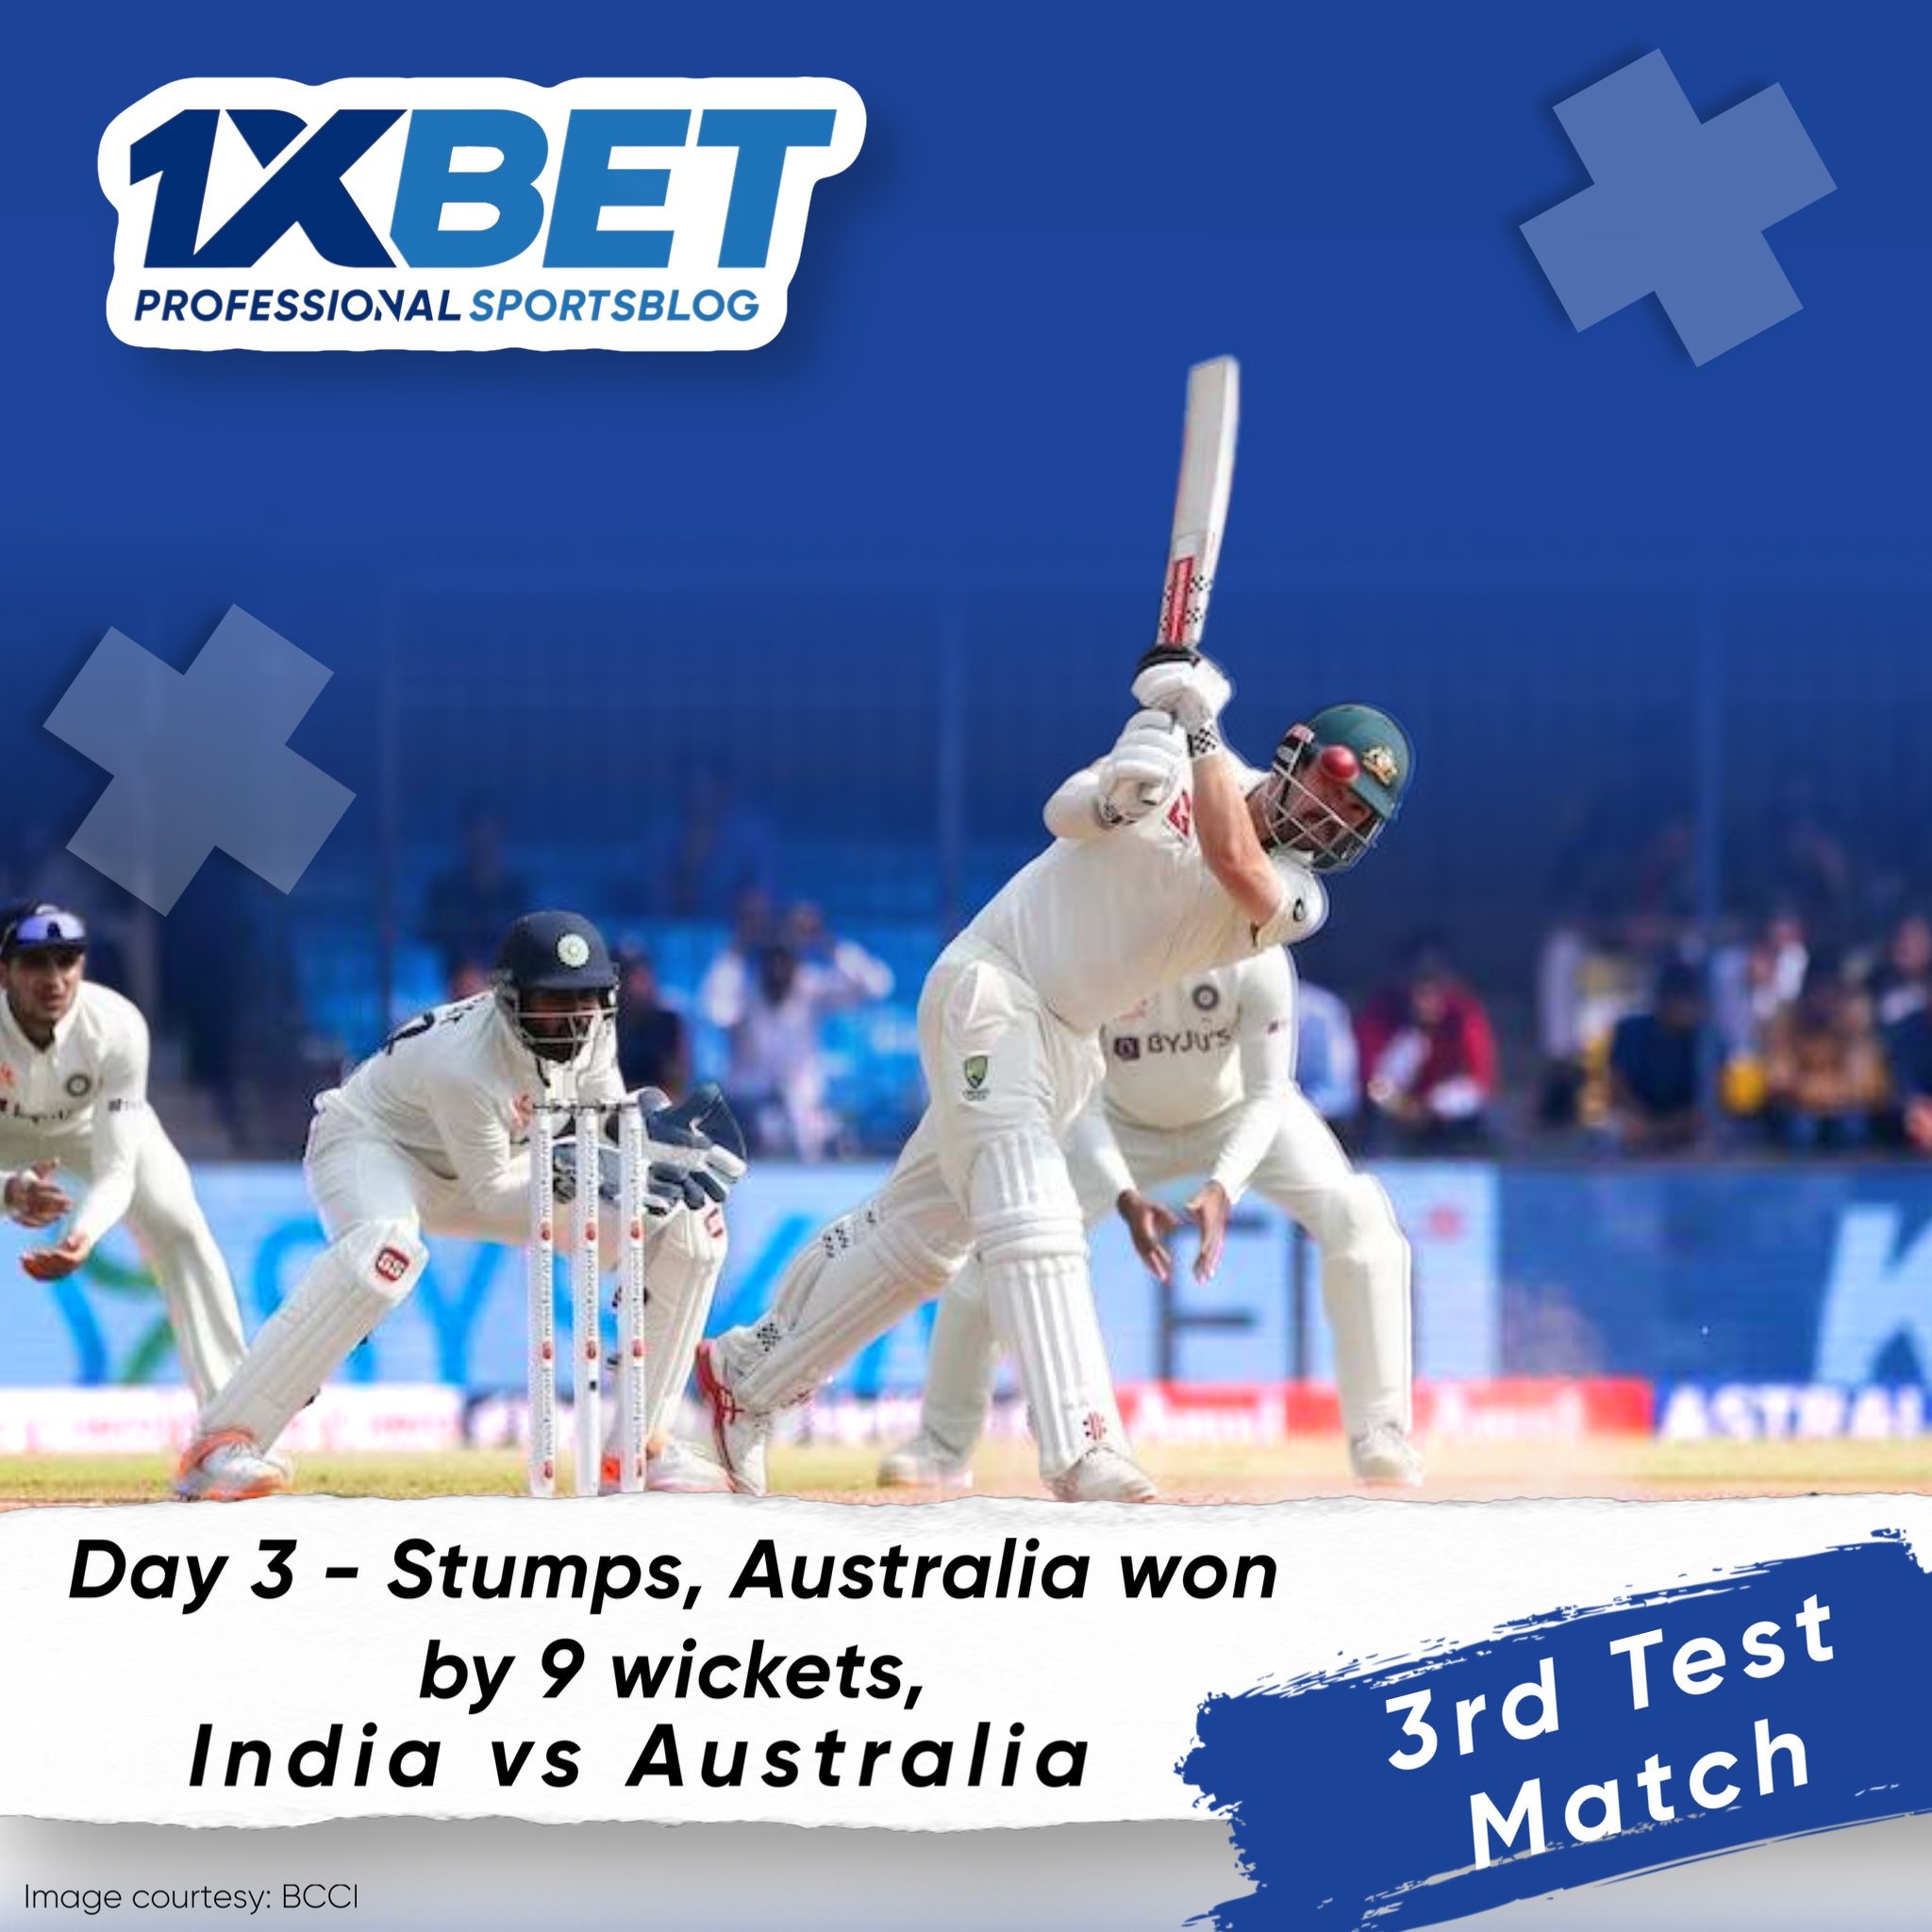 Day 3 - Stumps, Australia won by 9 wickets